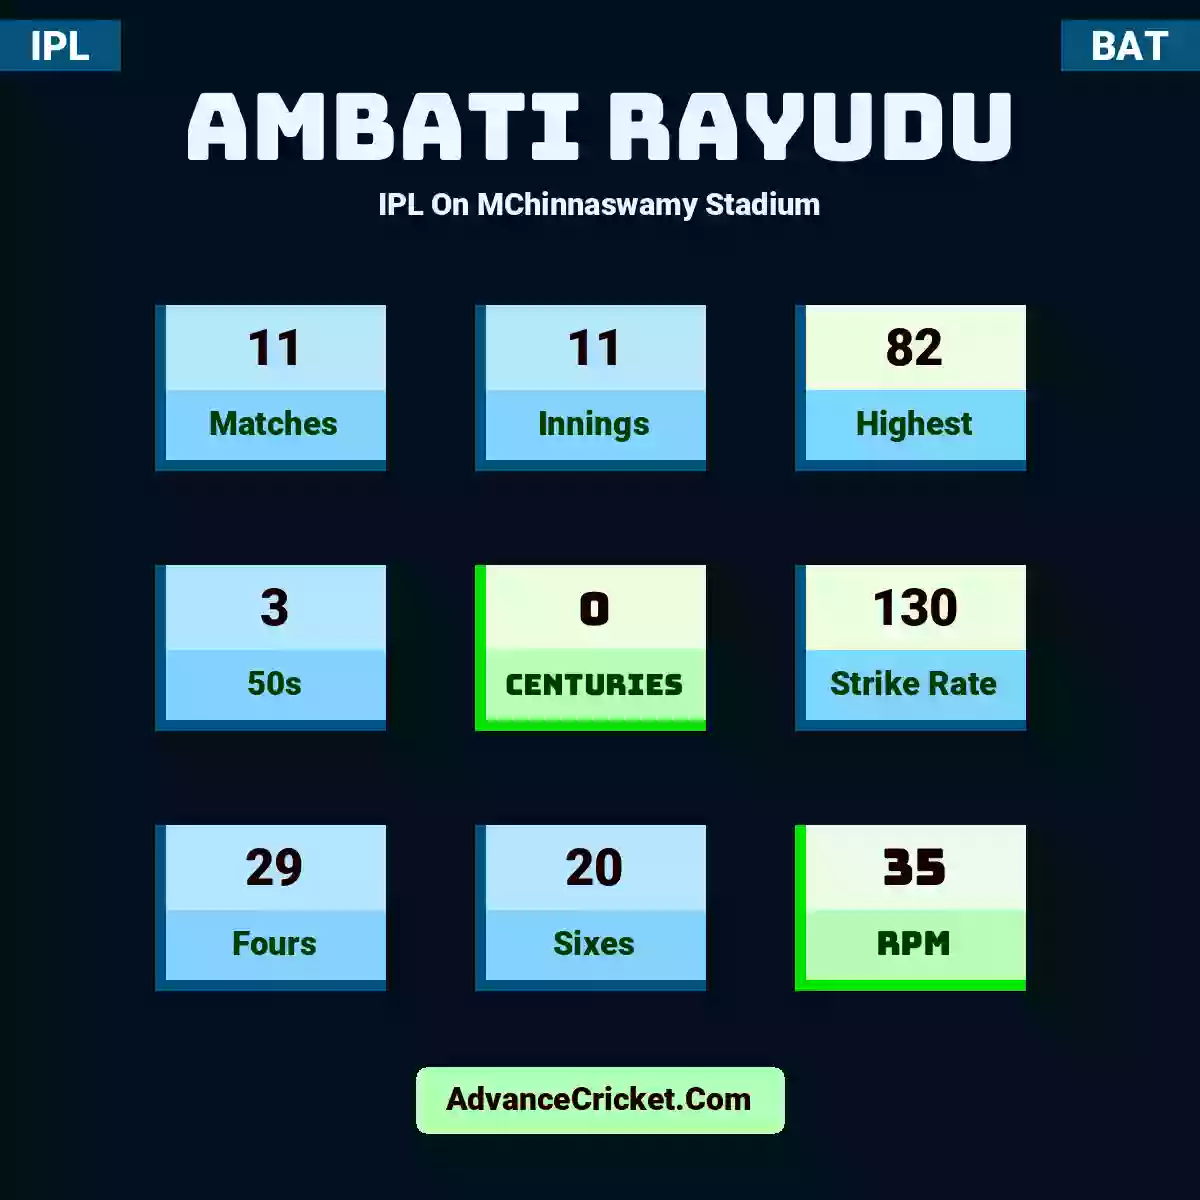 Ambati Rayudu IPL  On MChinnaswamy Stadium, Ambati Rayudu played 11 matches, scored 82 runs as highest, 3 half-centuries, and 0 centuries, with a strike rate of 130. A.Rayudu hit 29 fours and 20 sixes, with an RPM of 35.